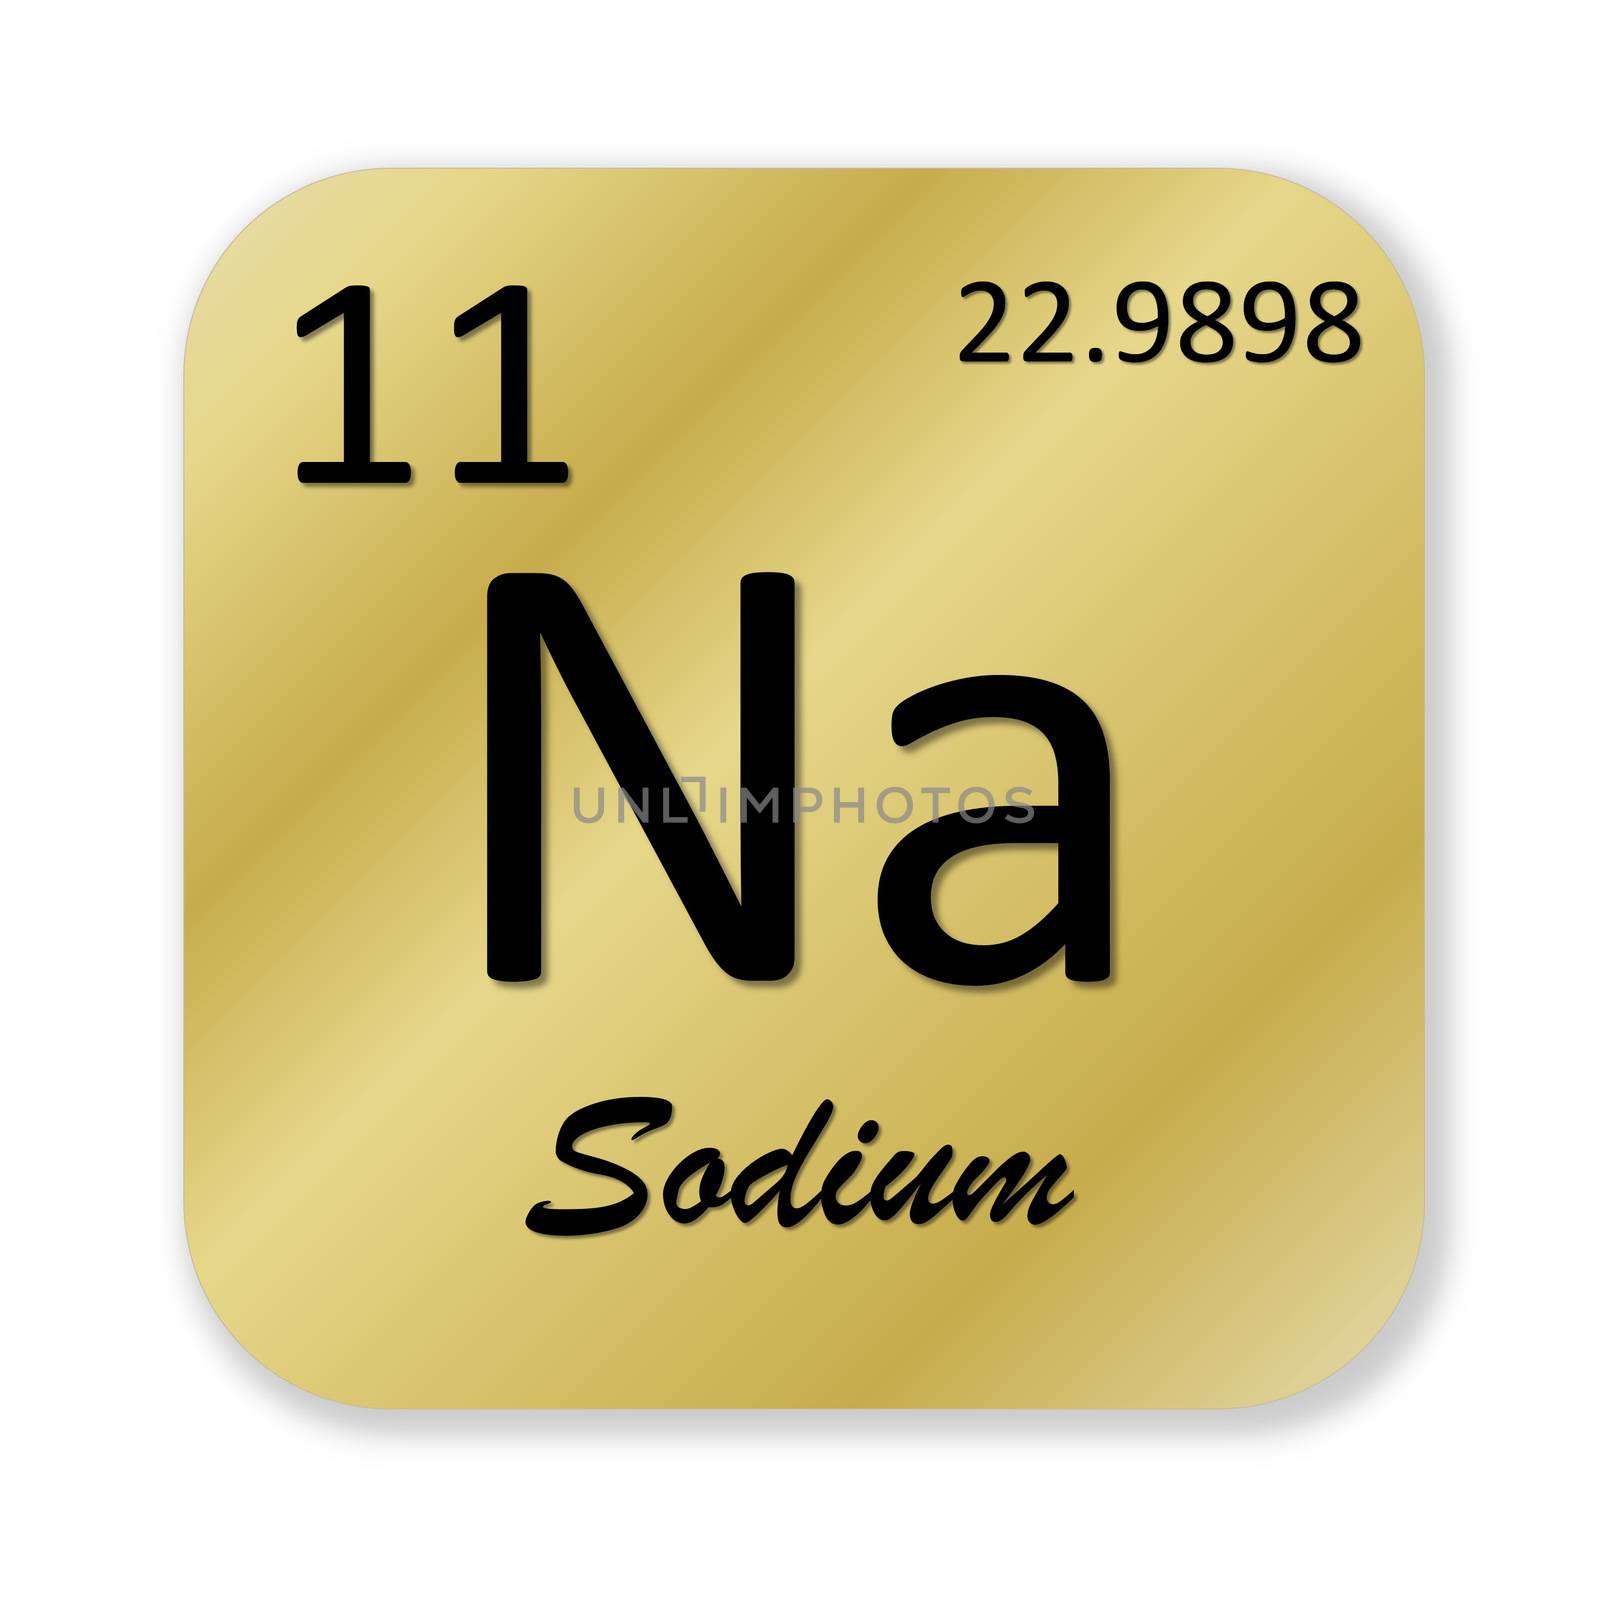 Black sodium element into golden square shape isolated in white background